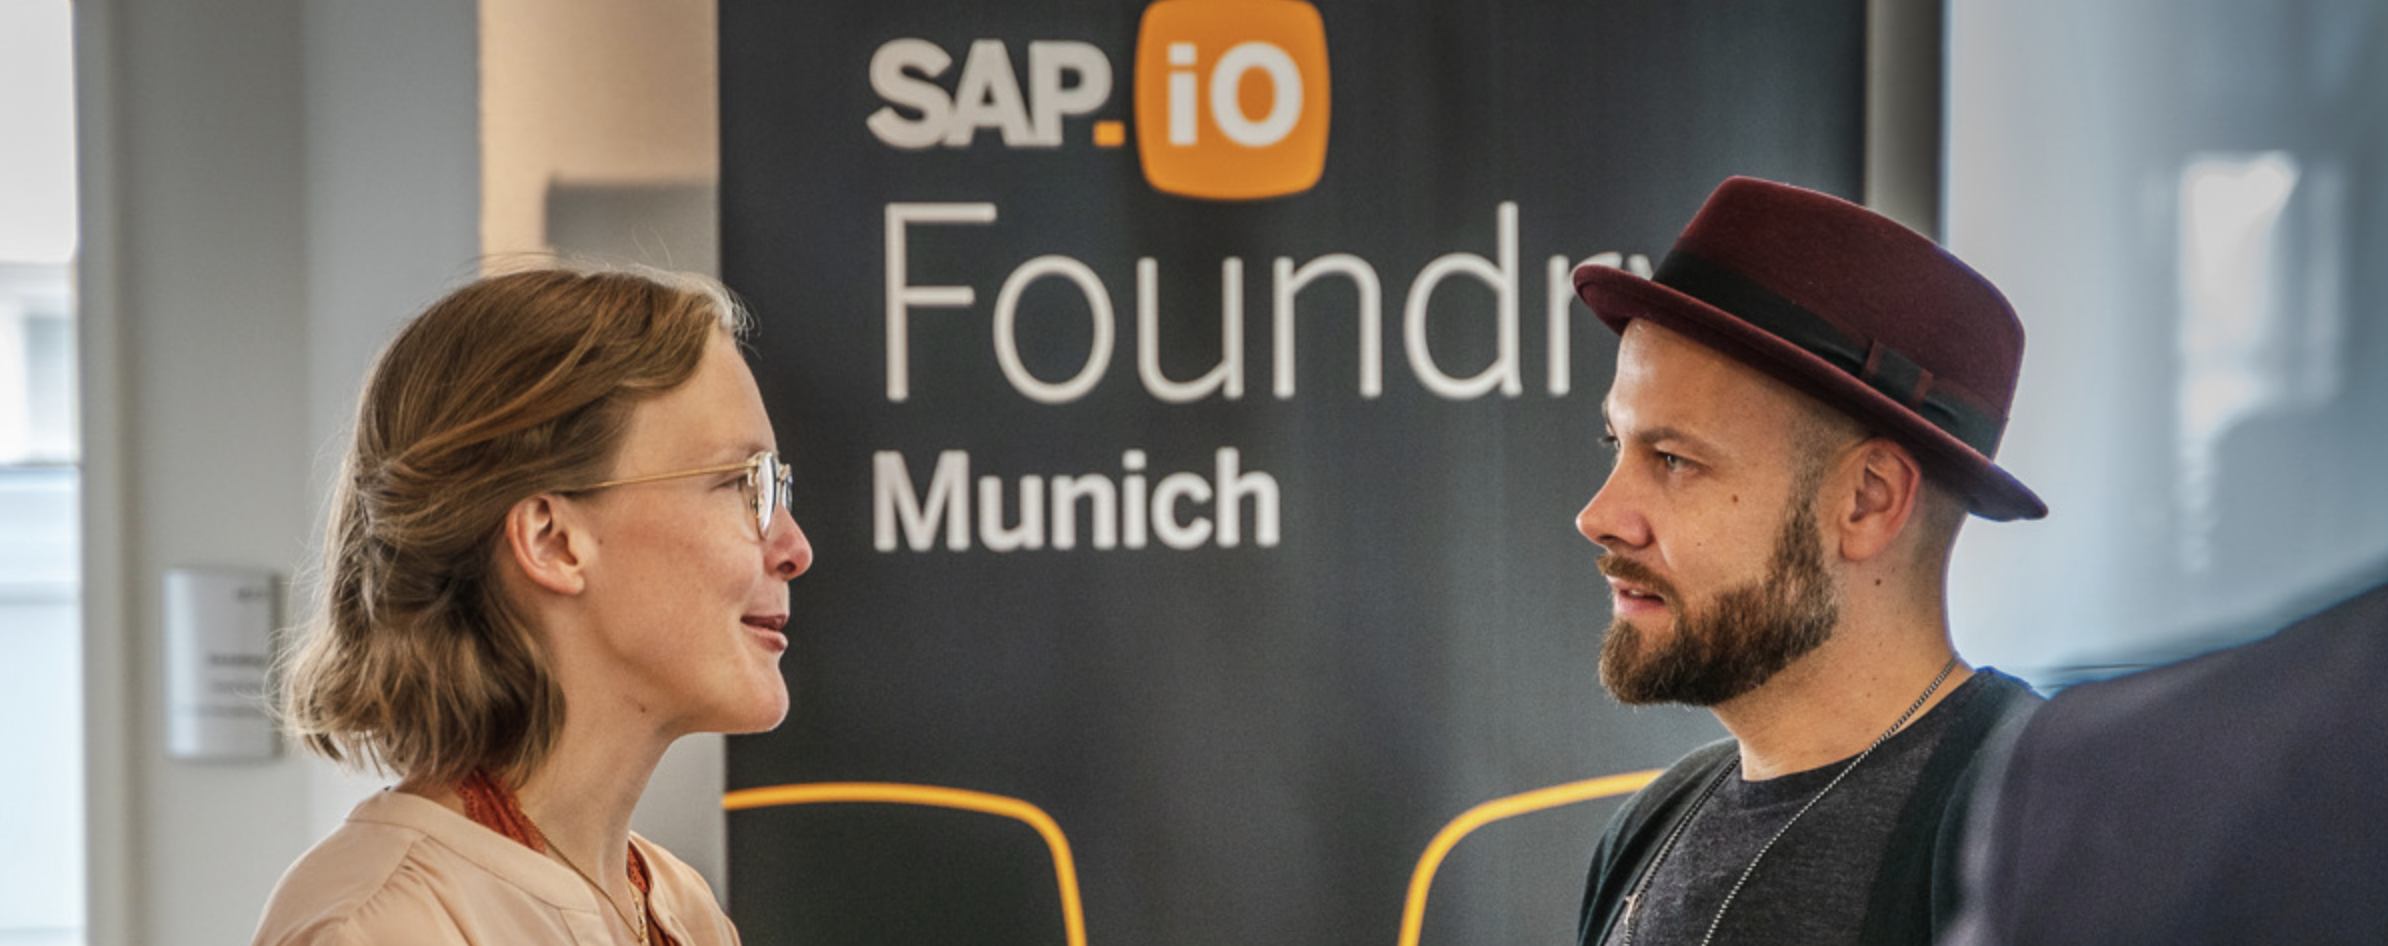 Open for Collaboration: SAP.iO Foundry Munich